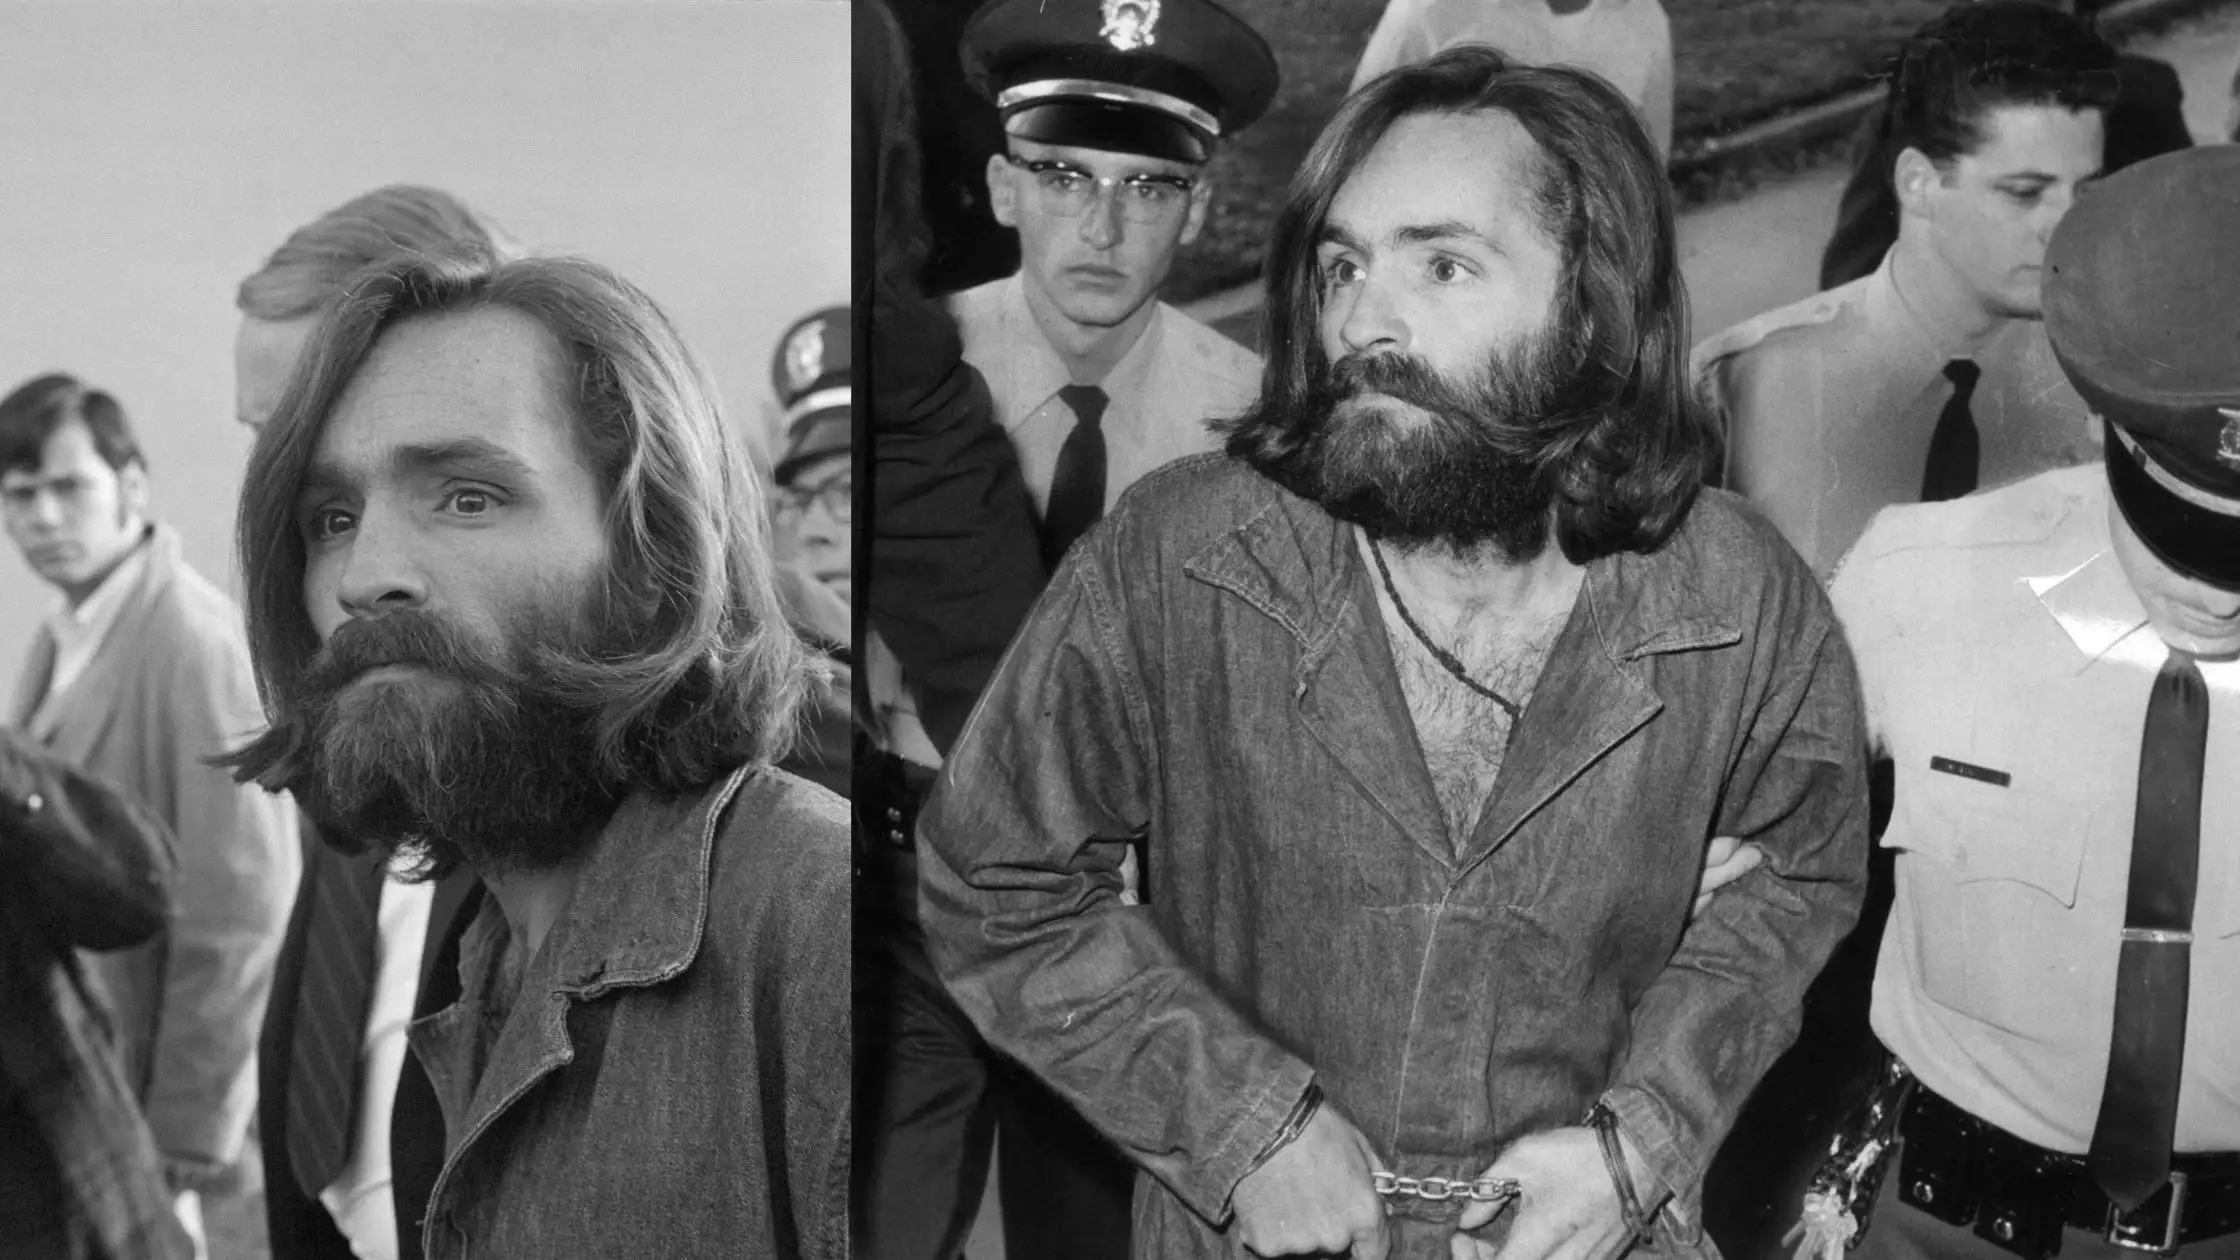 Linda Kasabian Death: Manson Family Member Linda Kasabian Died At The Age Of 73